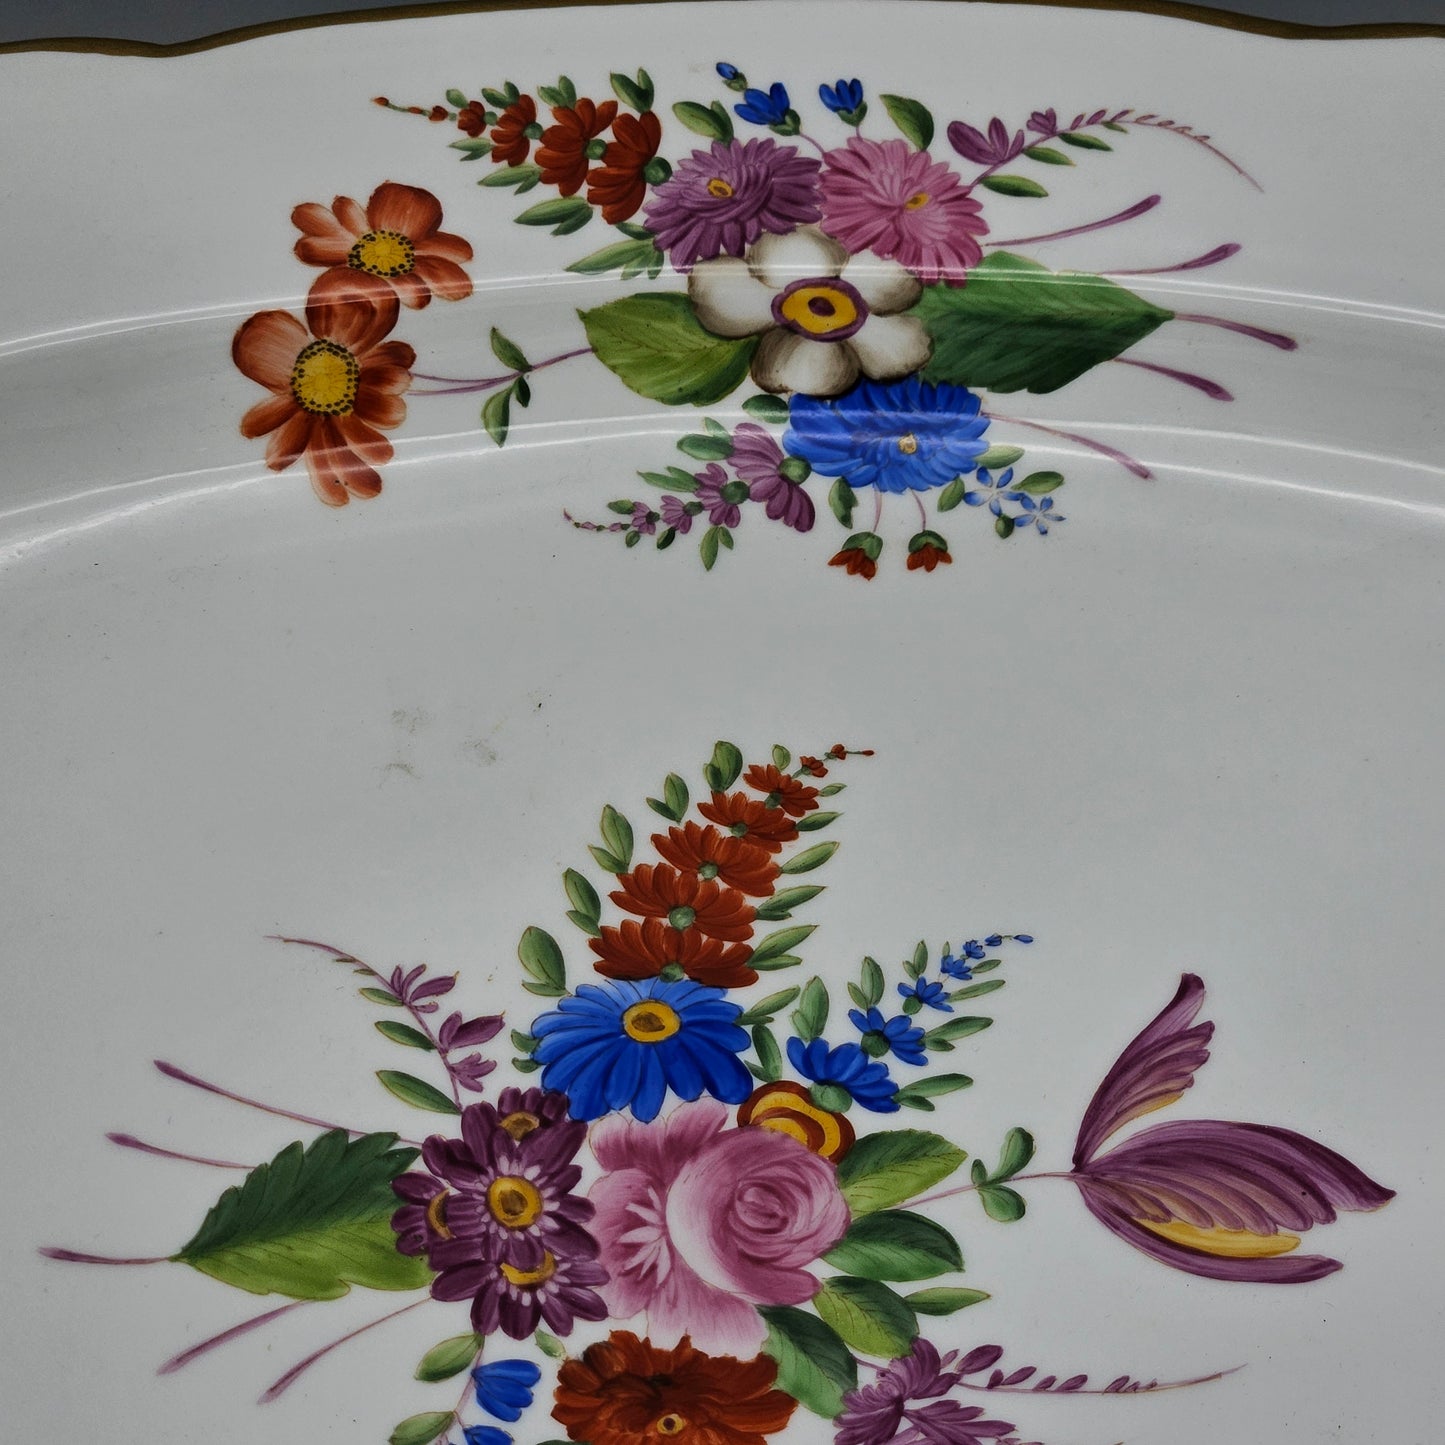 Beautiful Large Floral Chelsea House Porcelain Serving Platter